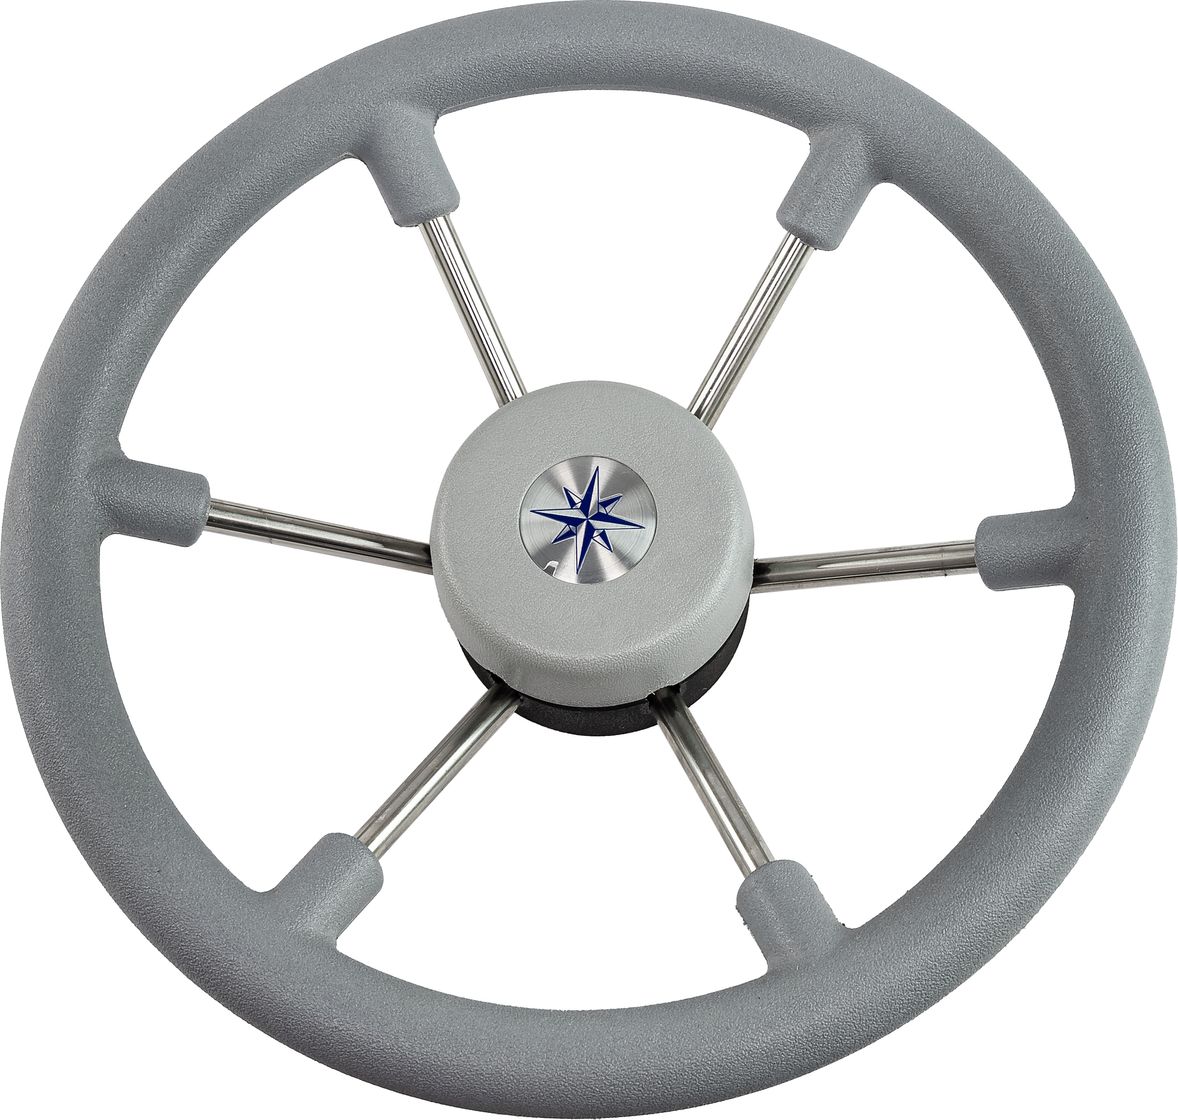 Рулевое колесо LEADER TANEGUM серый обод серебряные спицы д. 330 мм VN7330-03 рулевое колесо delfino обод серый спицы серебряные д 340 мм vn70401 03